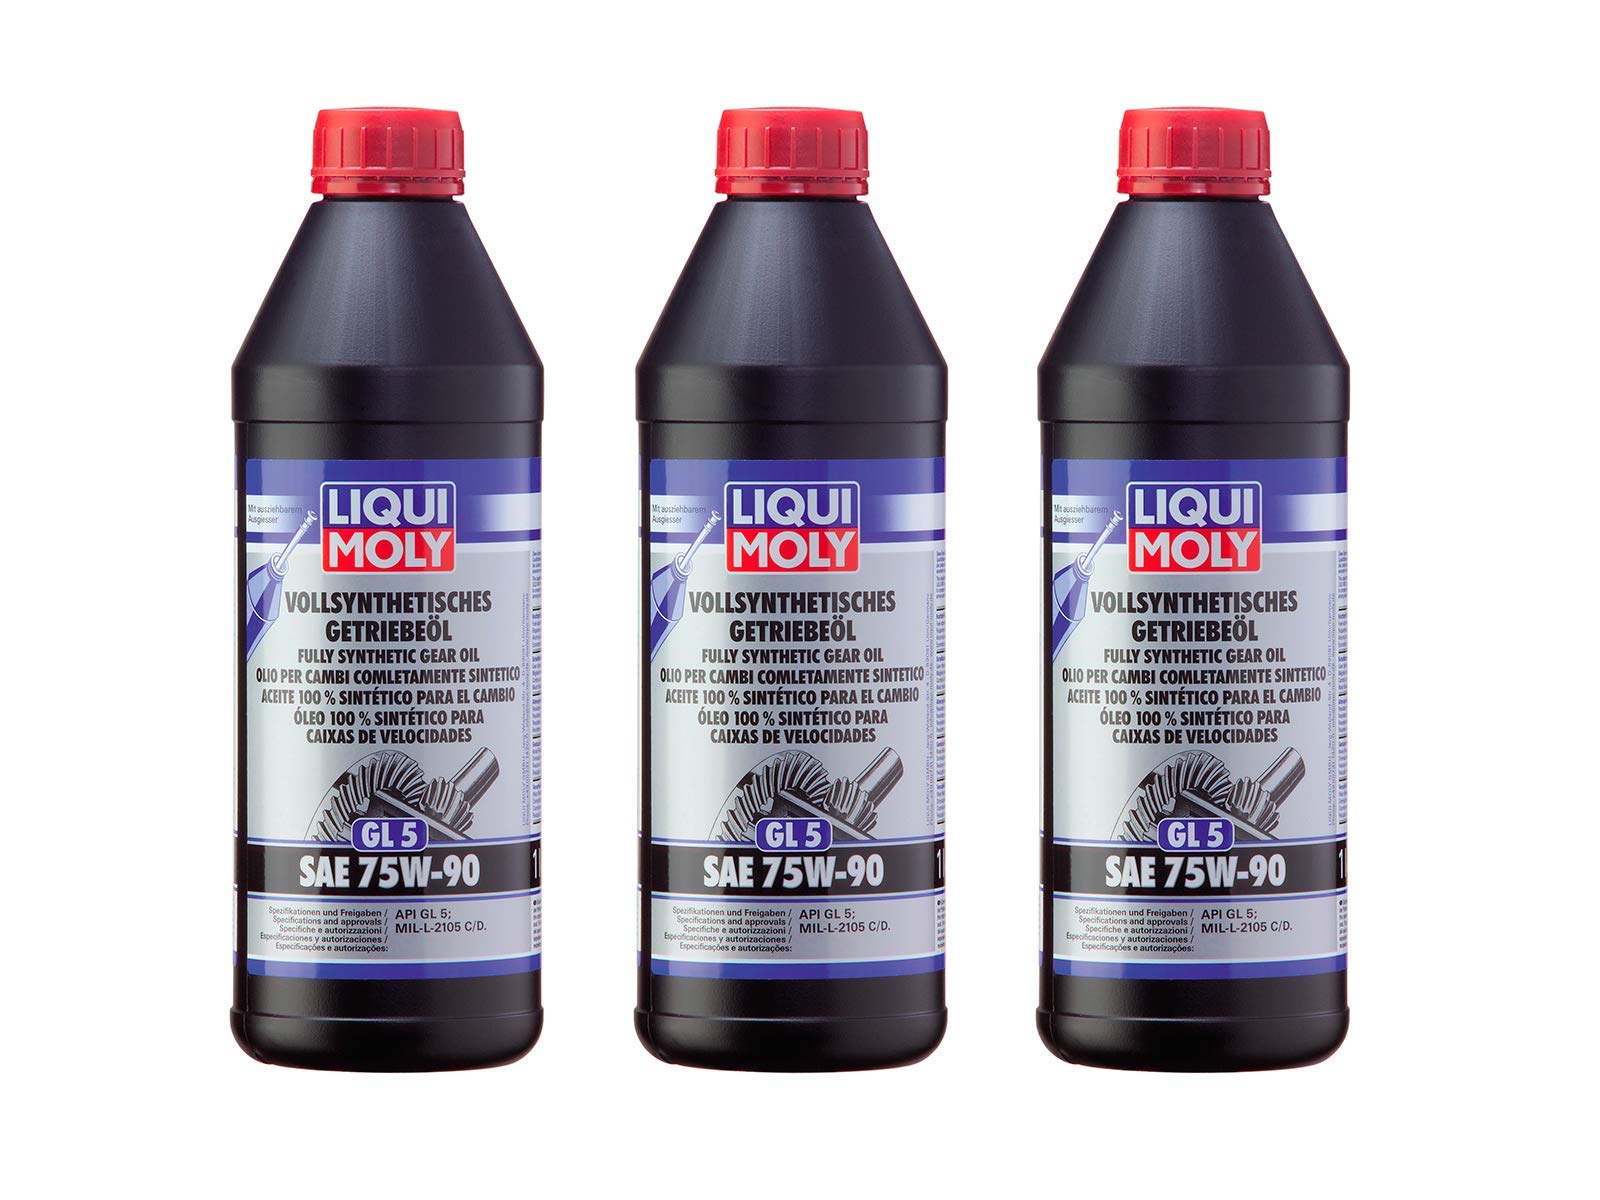 ILODA 3X Original Liqui Moly 1L Vollsynthetisches Getriebeöl (GL5) SAE 75W-90 Gear Oil von ILODA